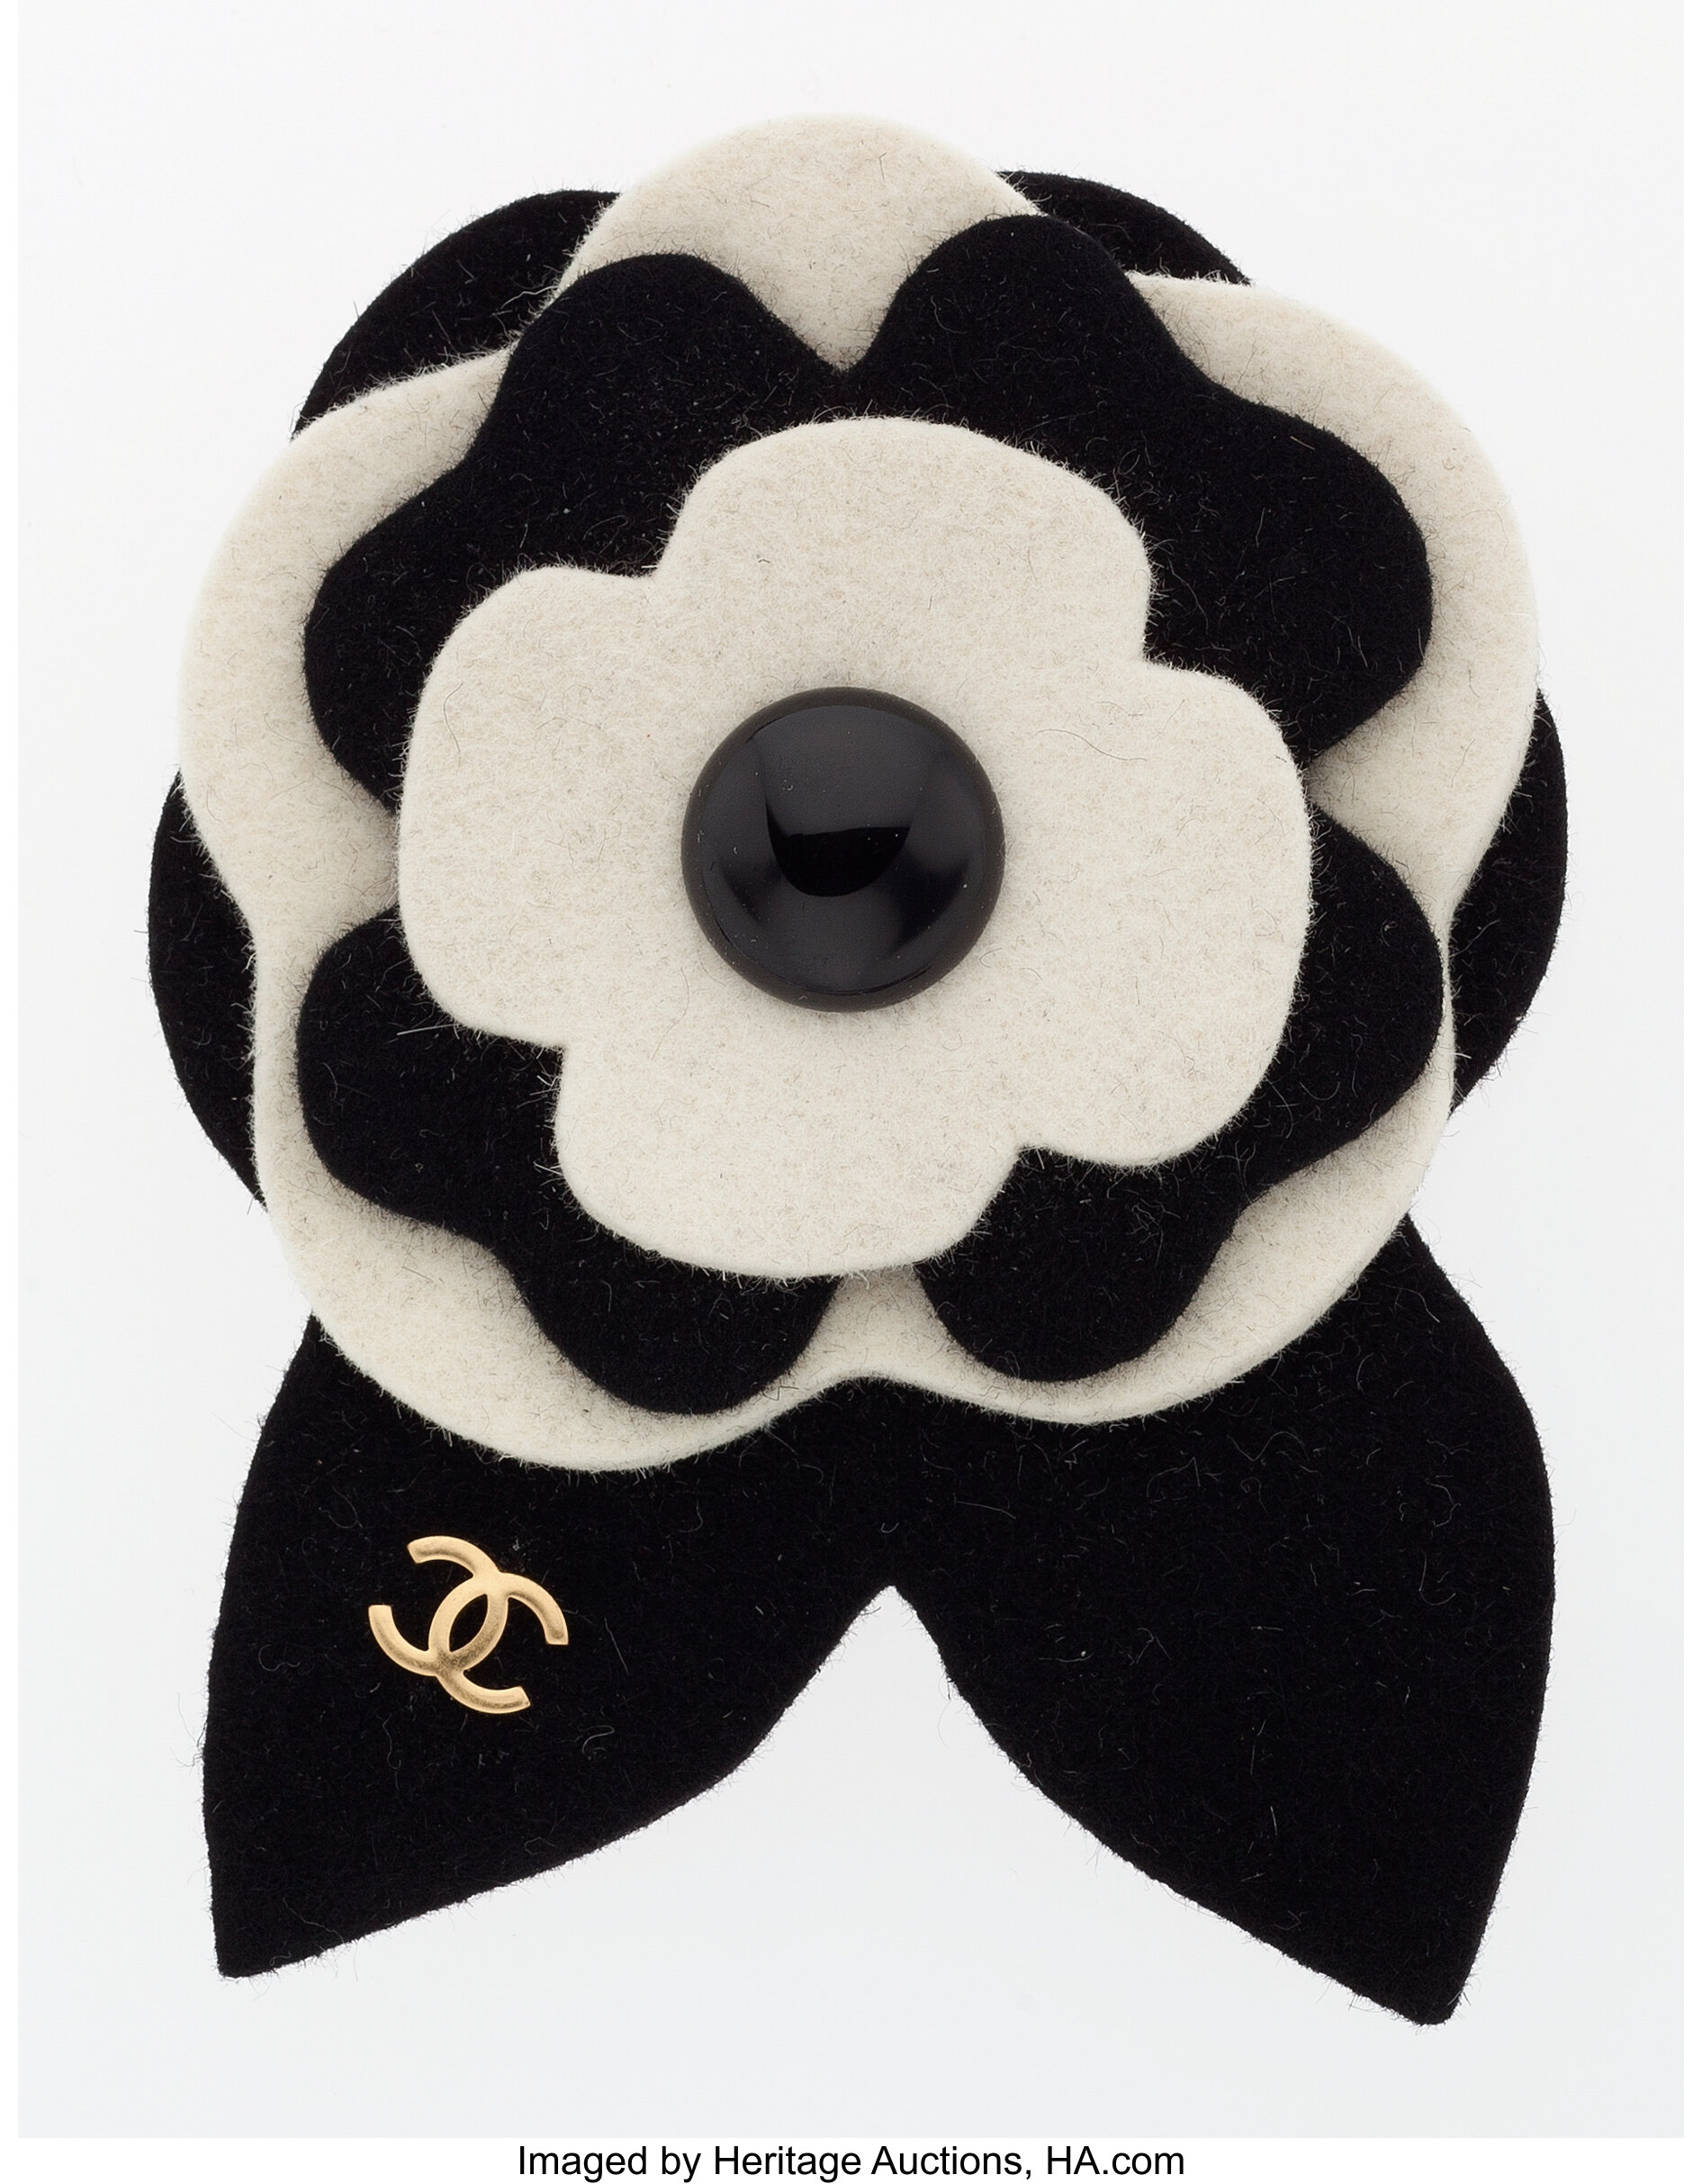 Vintage Chanel Brooch White Camelia on Black Ribbon